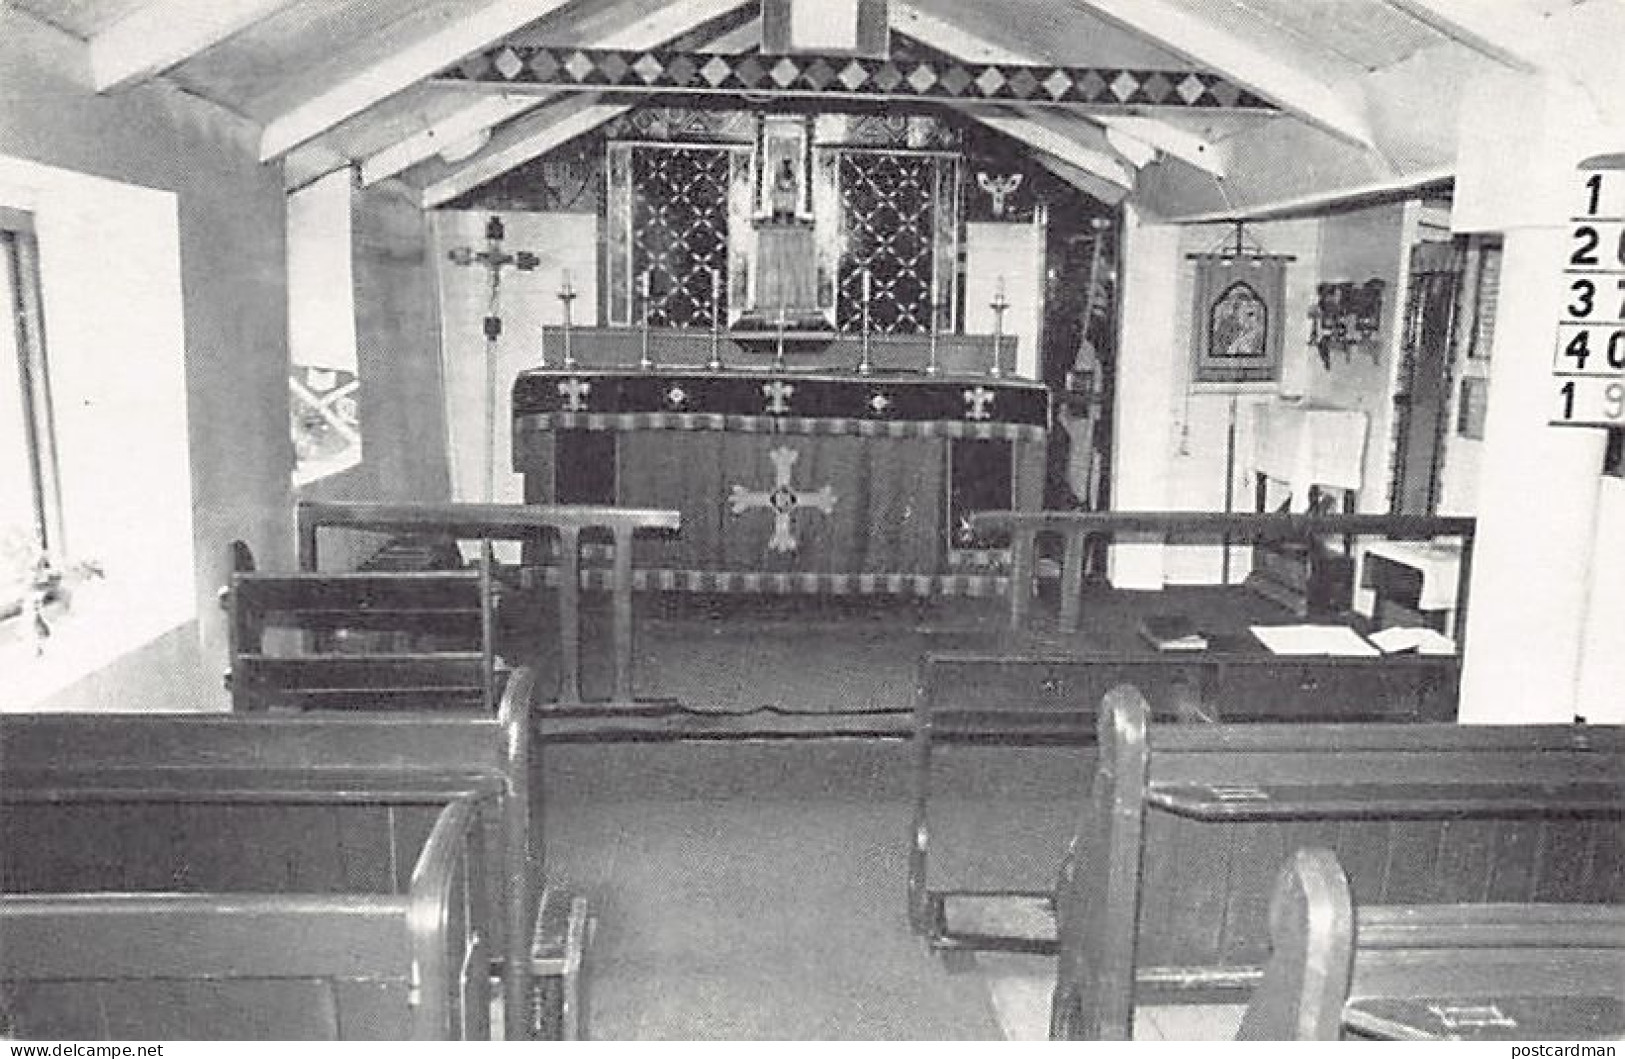 TRISTAN DA CUNHA - Interior From St. Mary's Church - Publ. Roland Svensson (Year 1979)  - Saint Helena Island